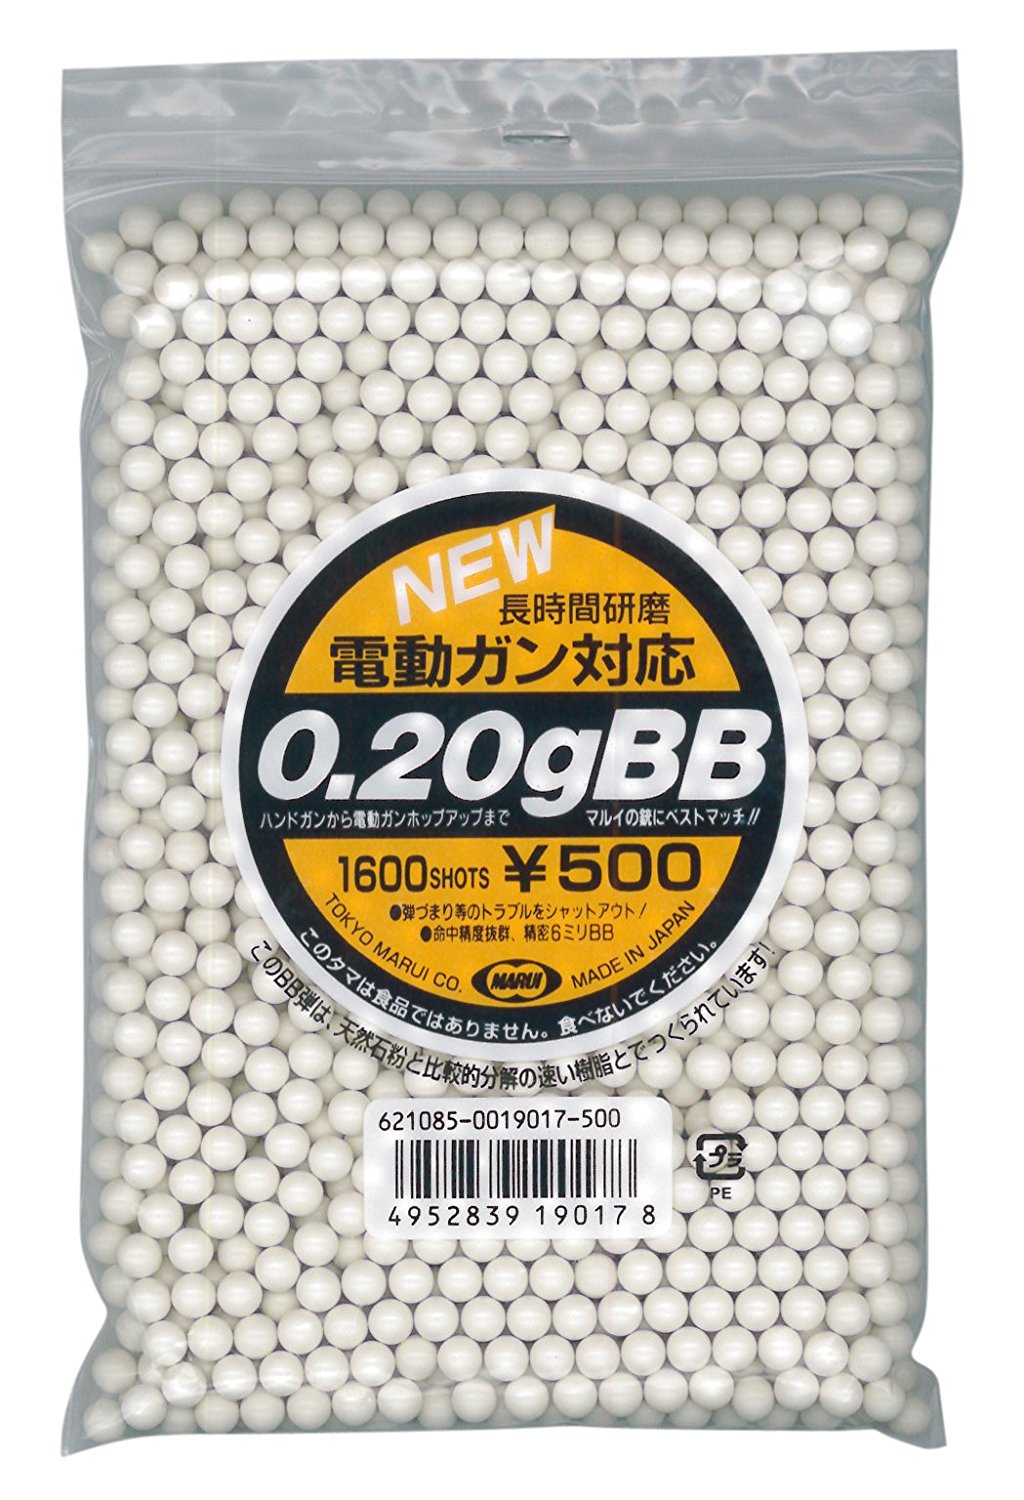 BB Bullet 0.20g (1600 BBs)